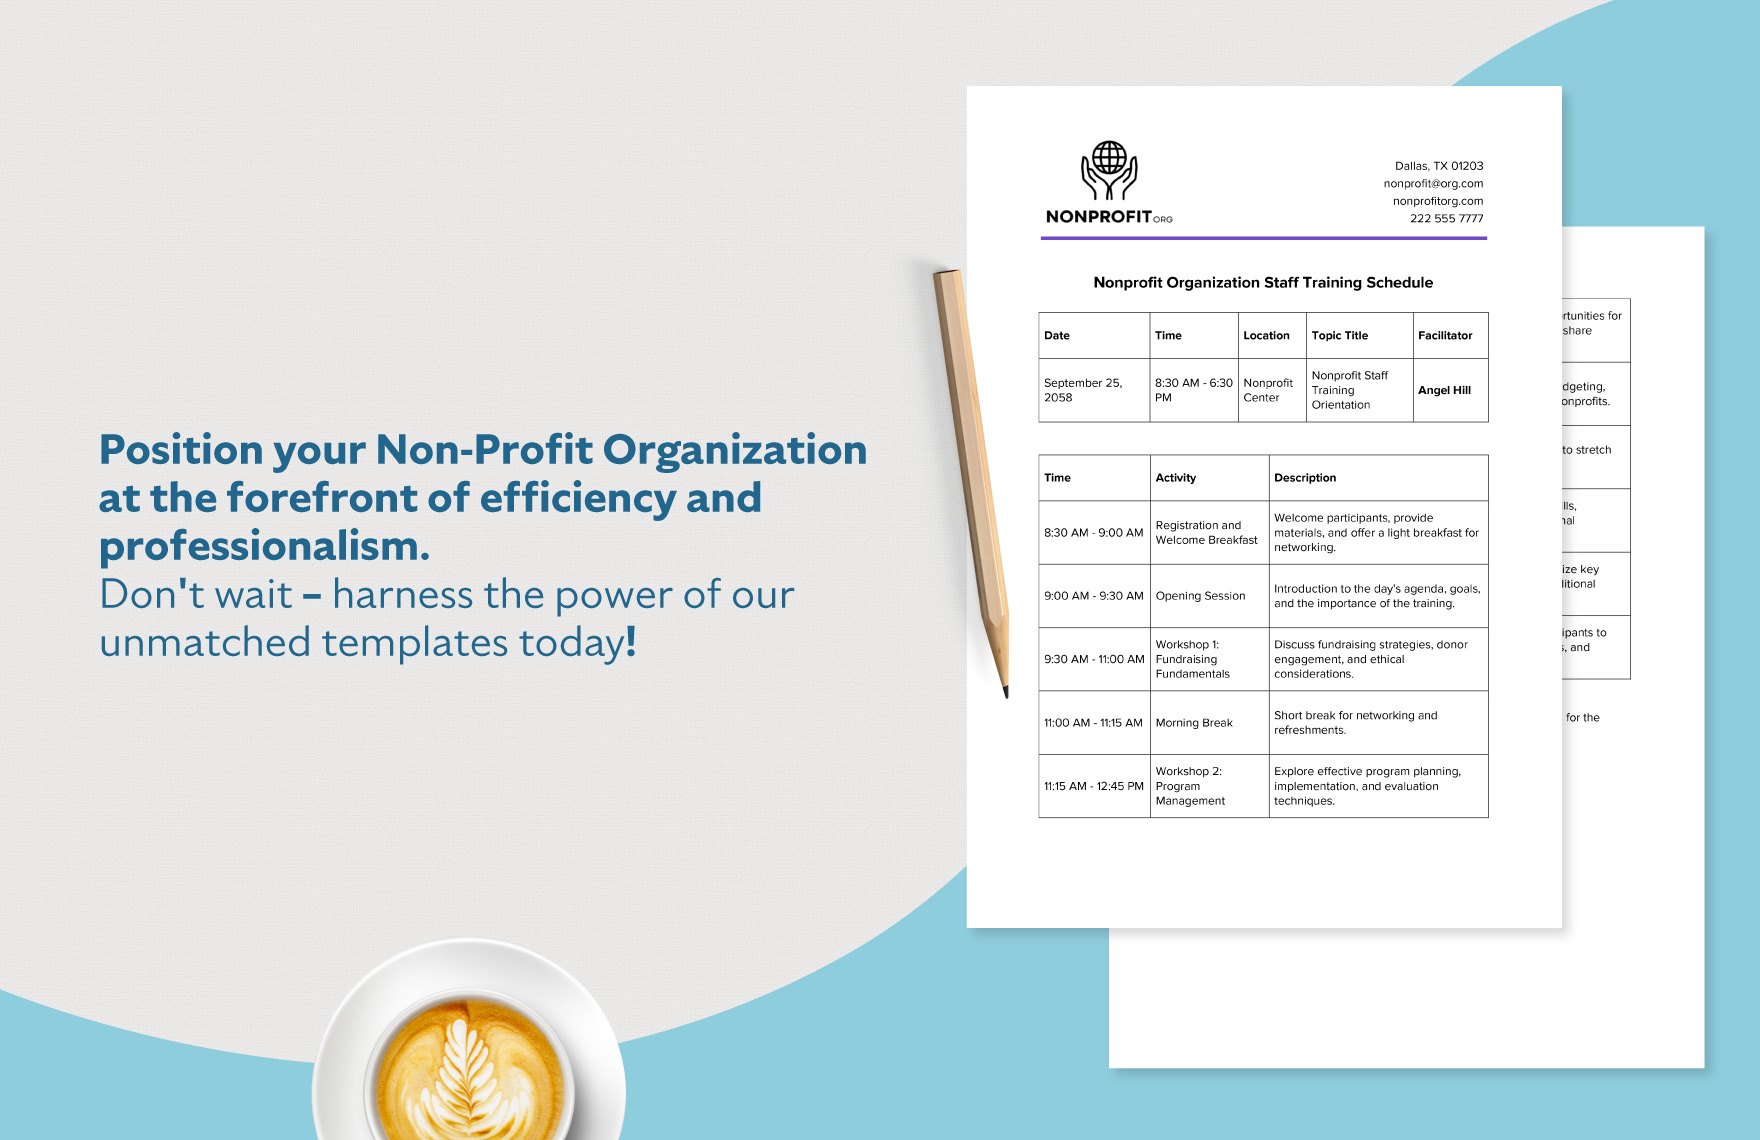 Nonprofit Organization Staff Equipment Request Form Template